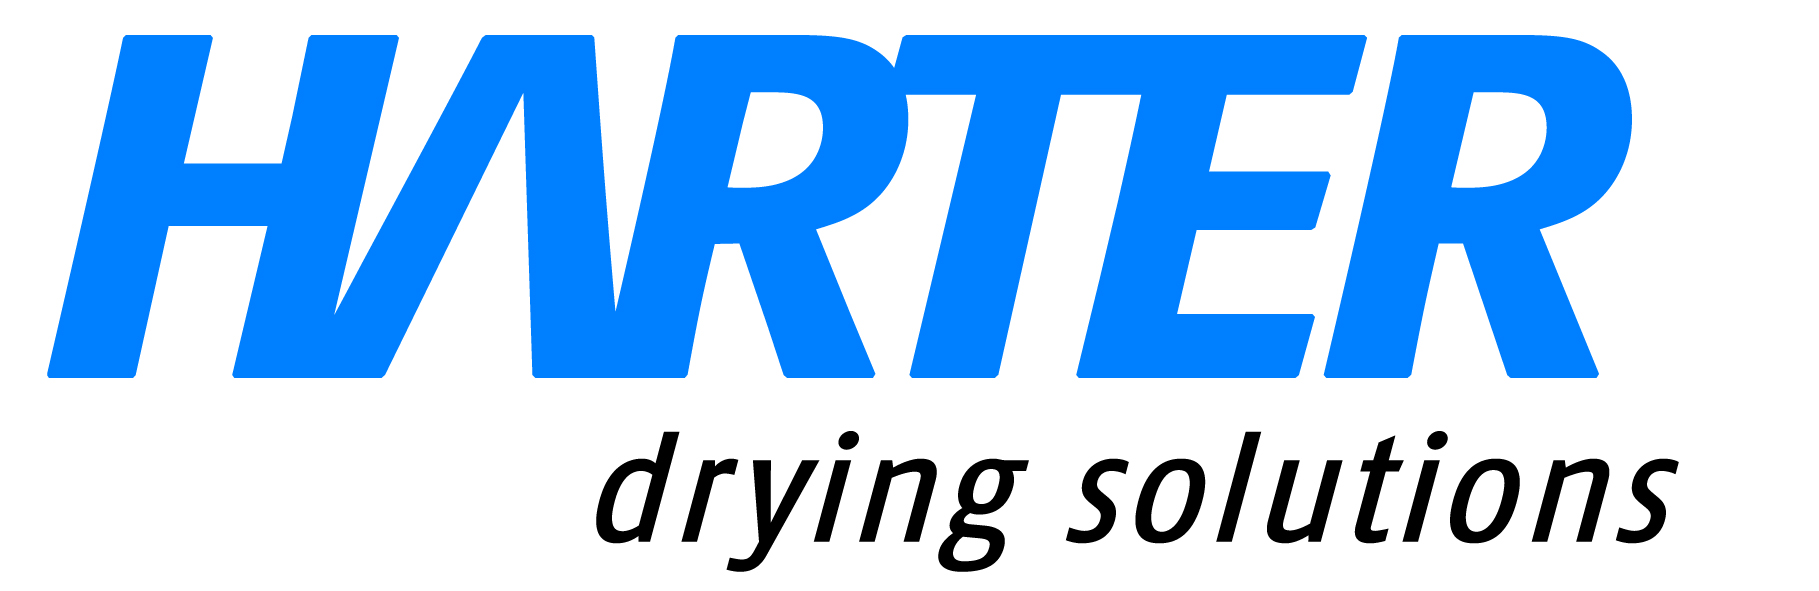 Harter GmbH_logo